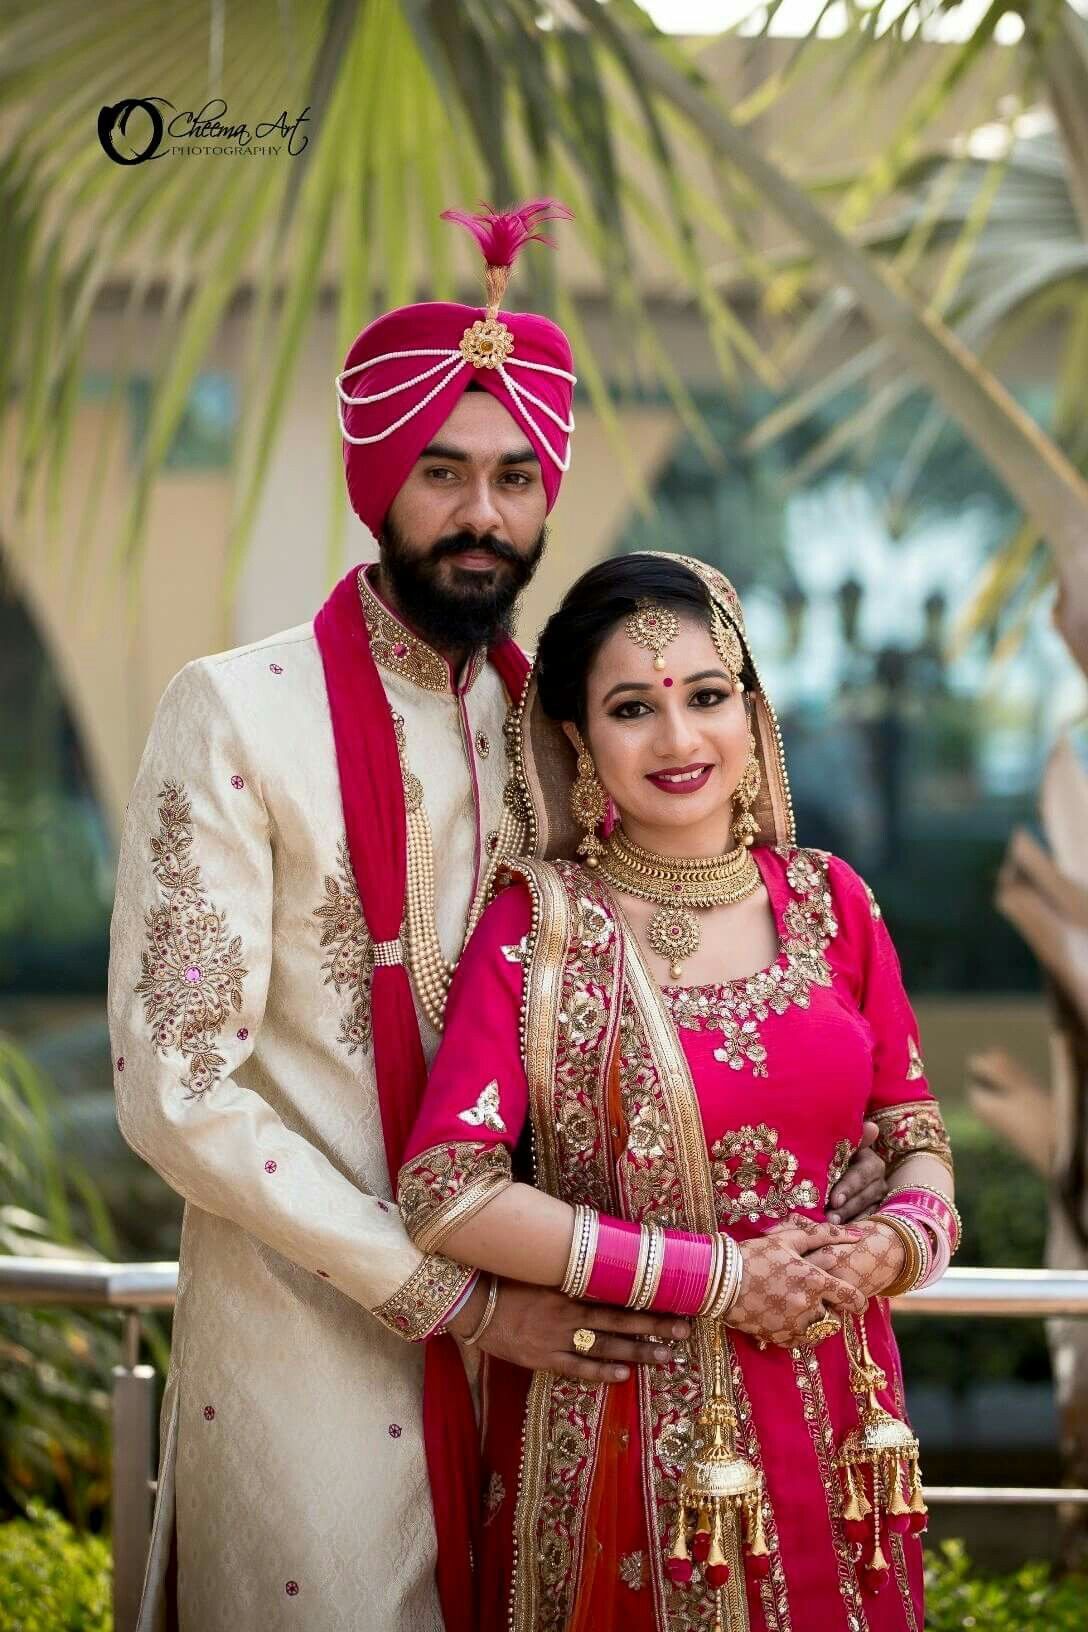 70+ Free Indian Wedding Couple & Indian Wedding Images - Pixabay